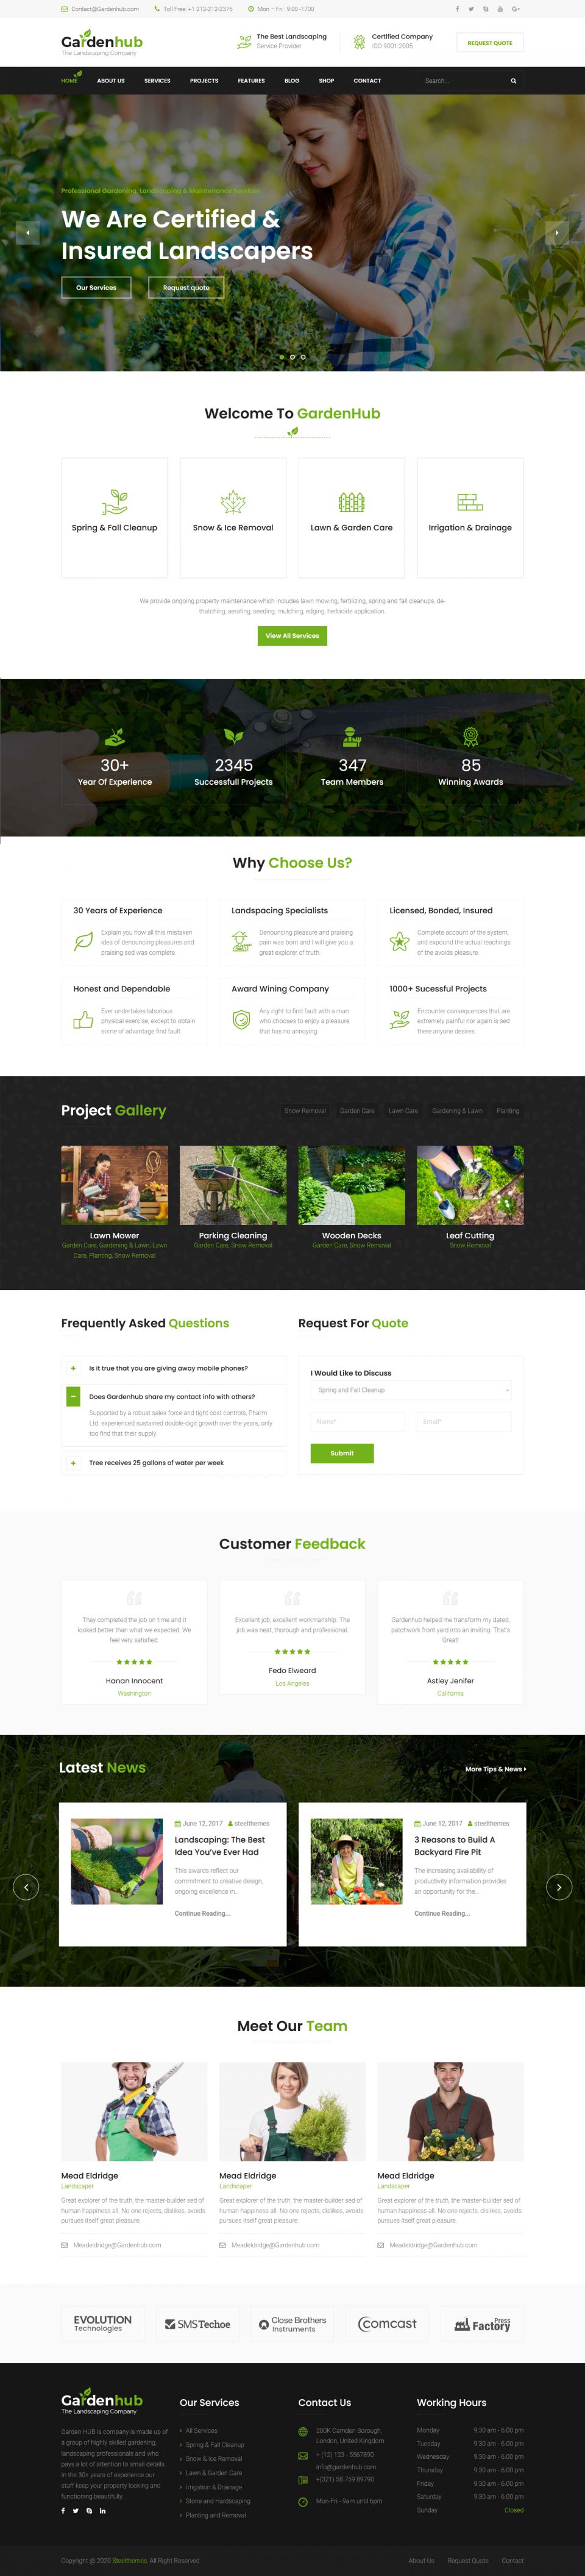 WordPress template ThemeForest Garden HUB